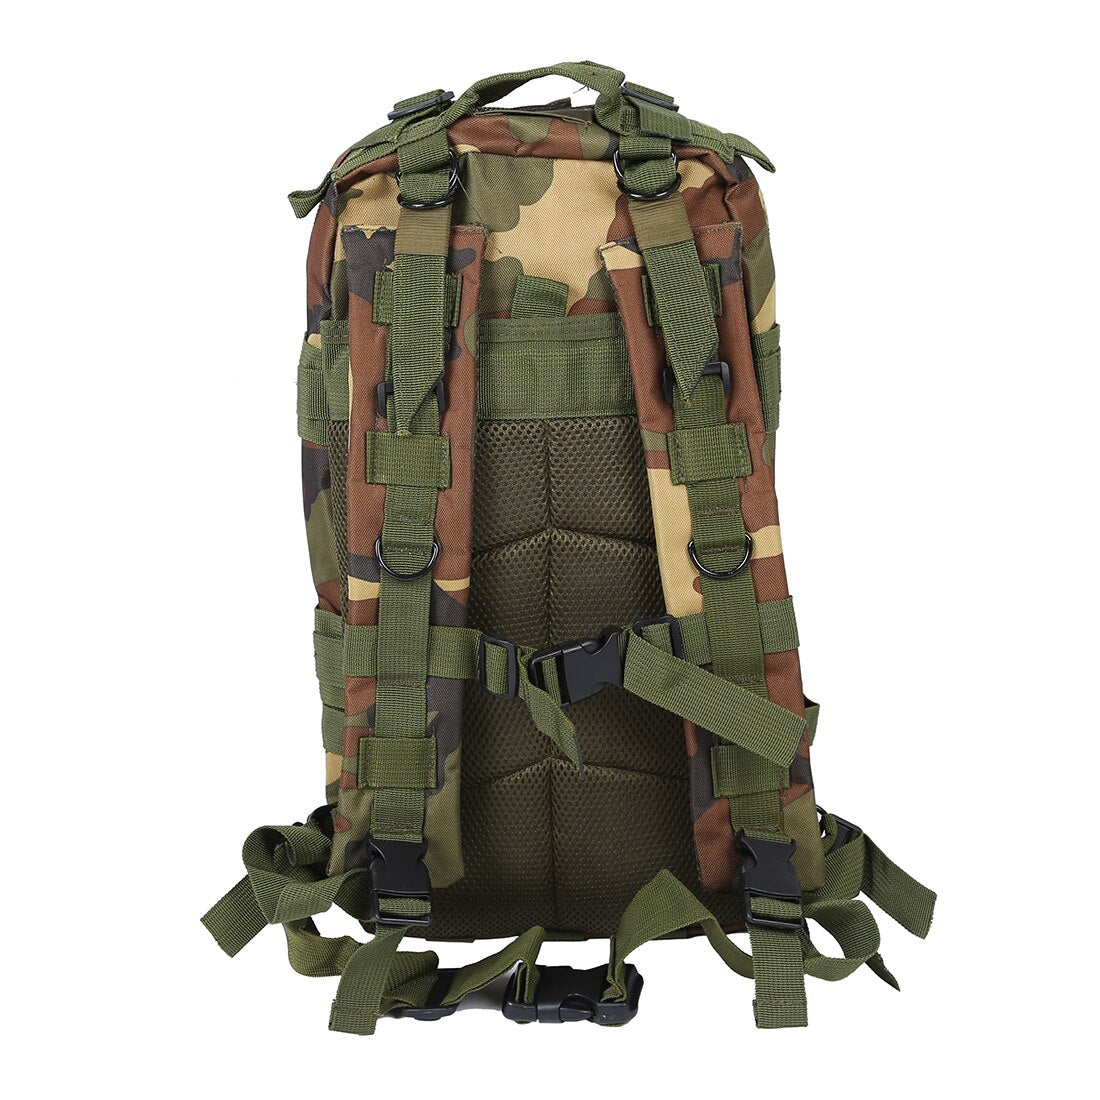 New 30L   Military  Backpack Rucksacks   Trekking Bag Jungle camouflage - ebowsos